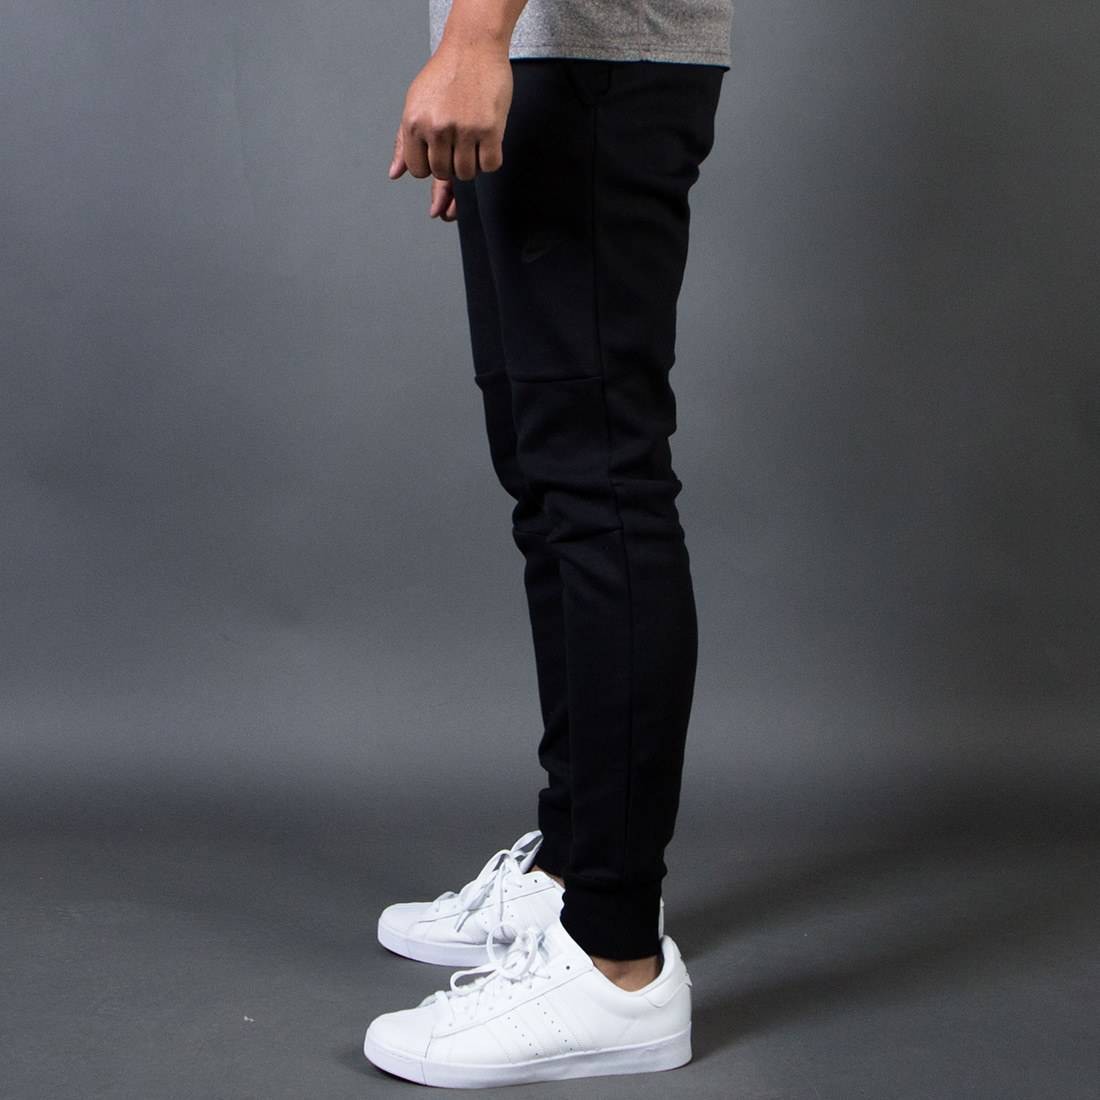 Nike Mens Tech Fleece Pants - Black